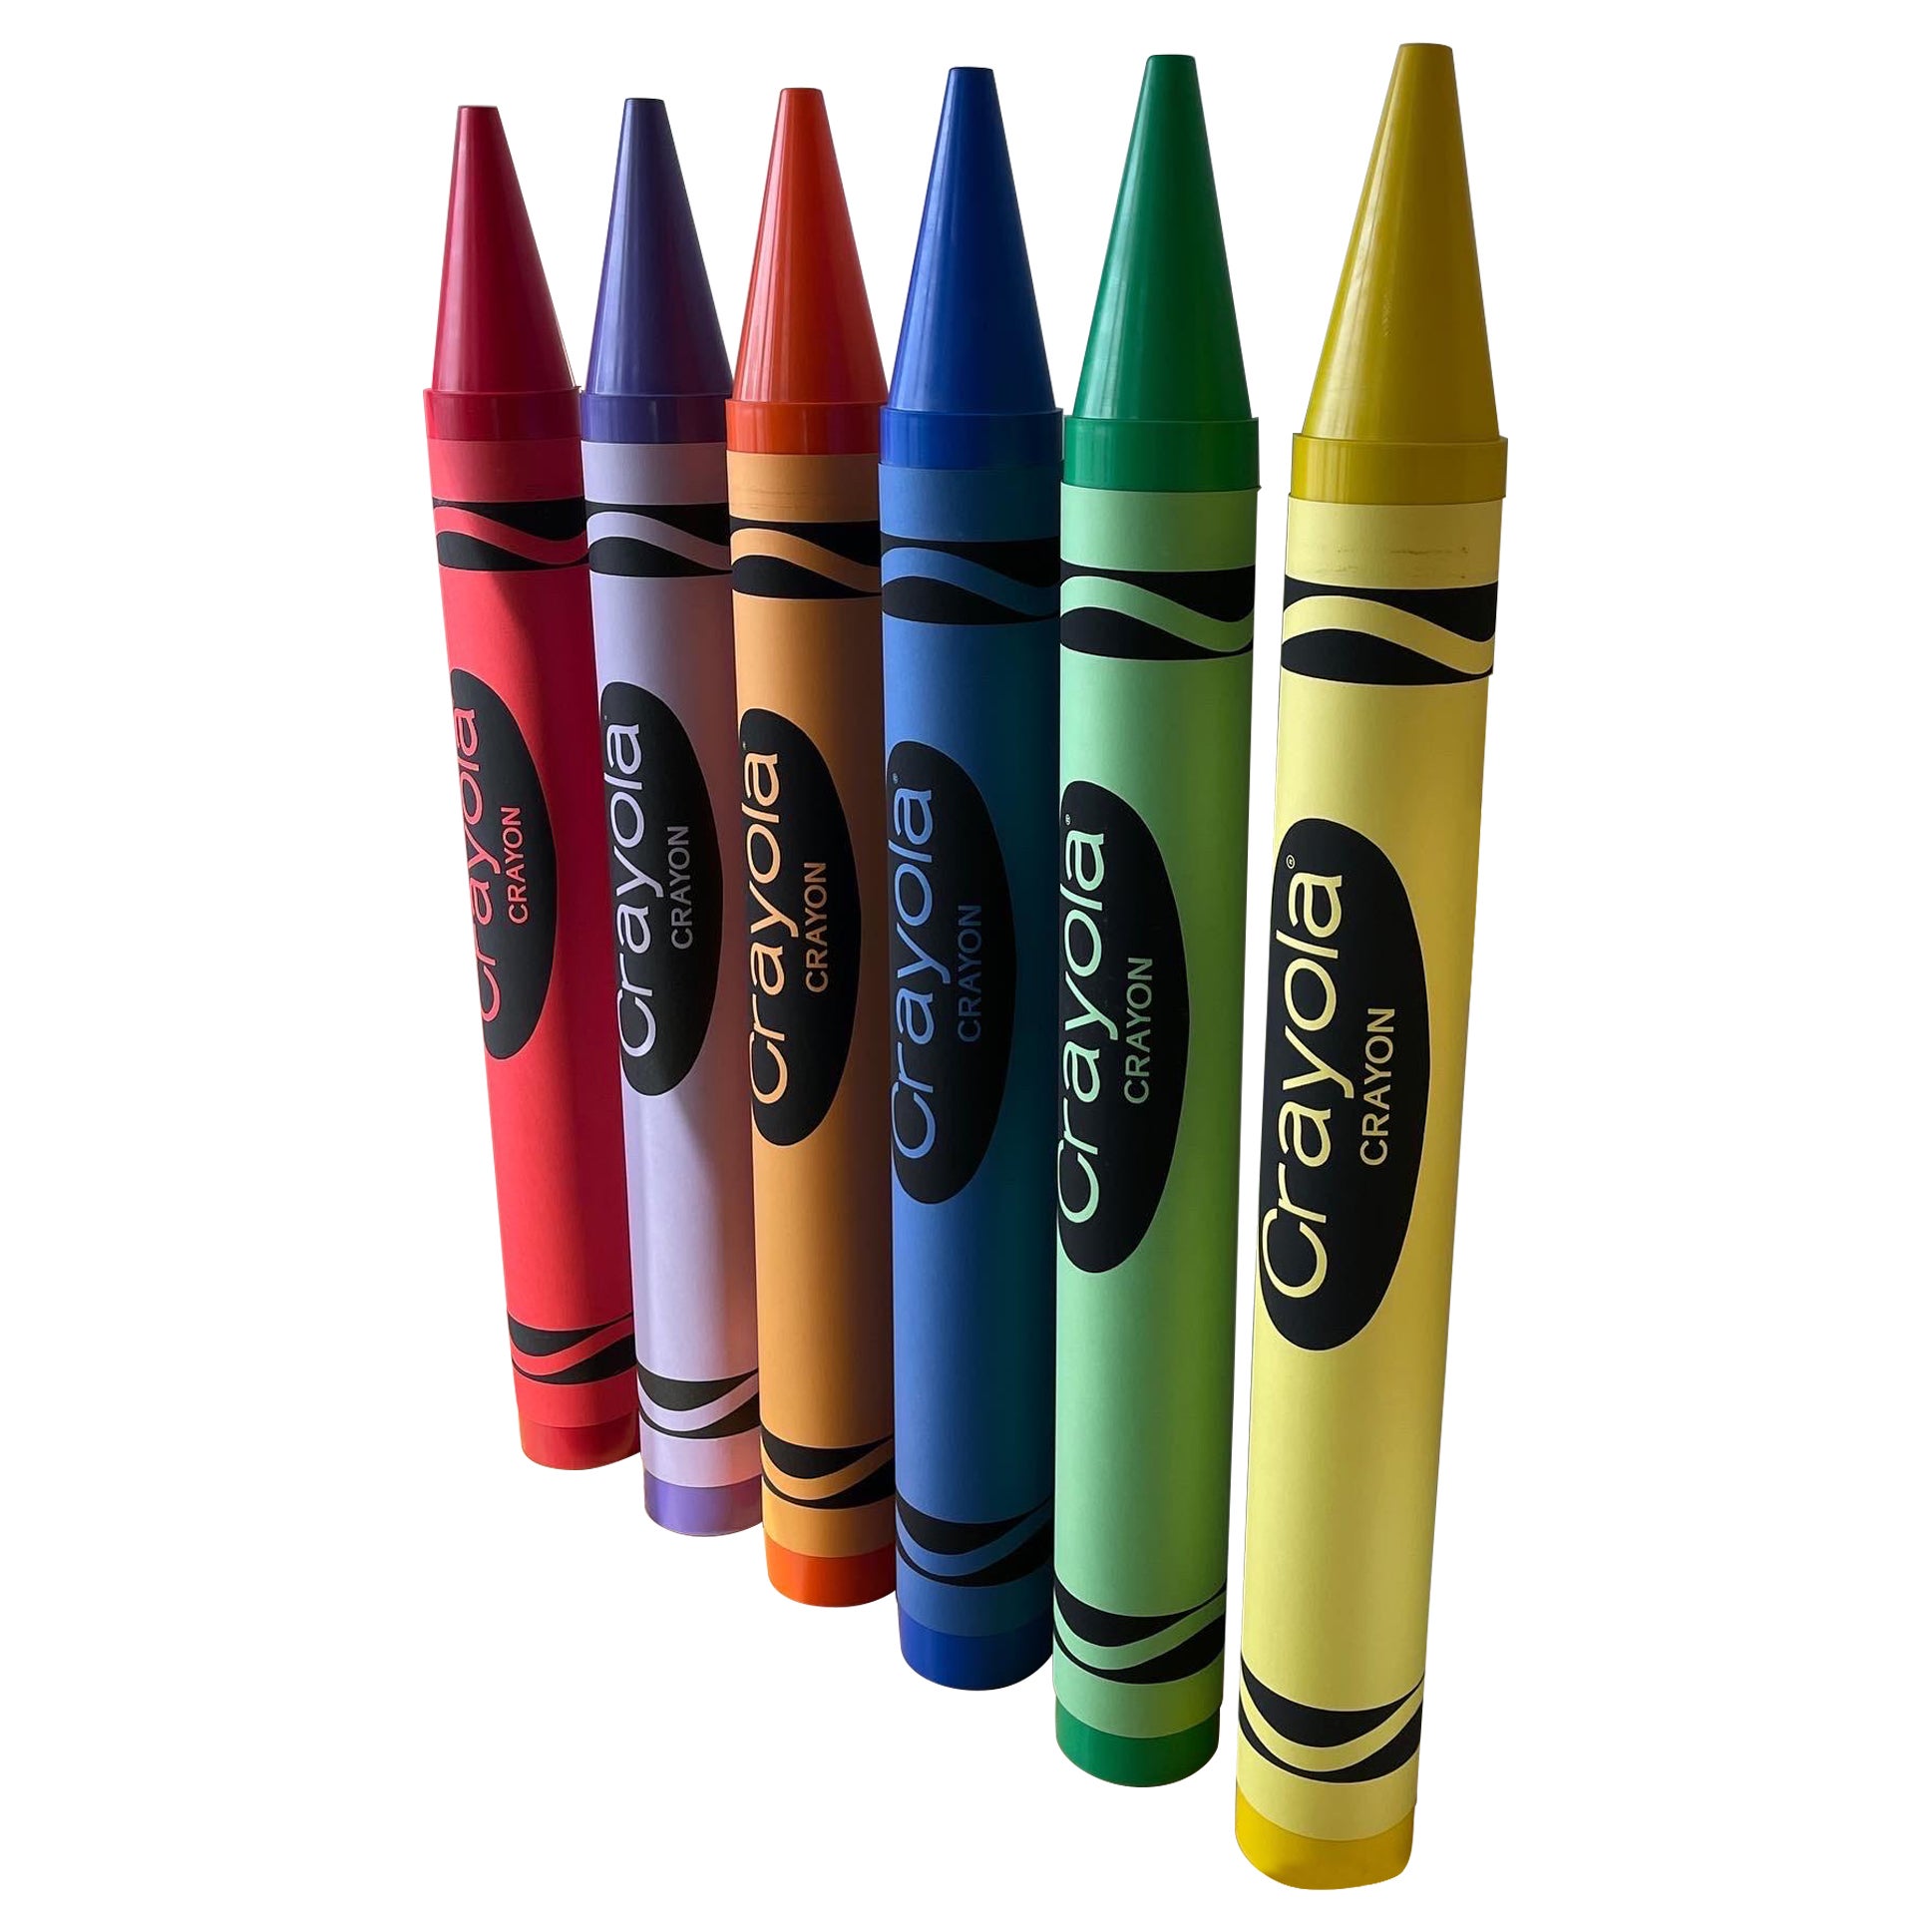 1970’s Monumental Think Big Crayons